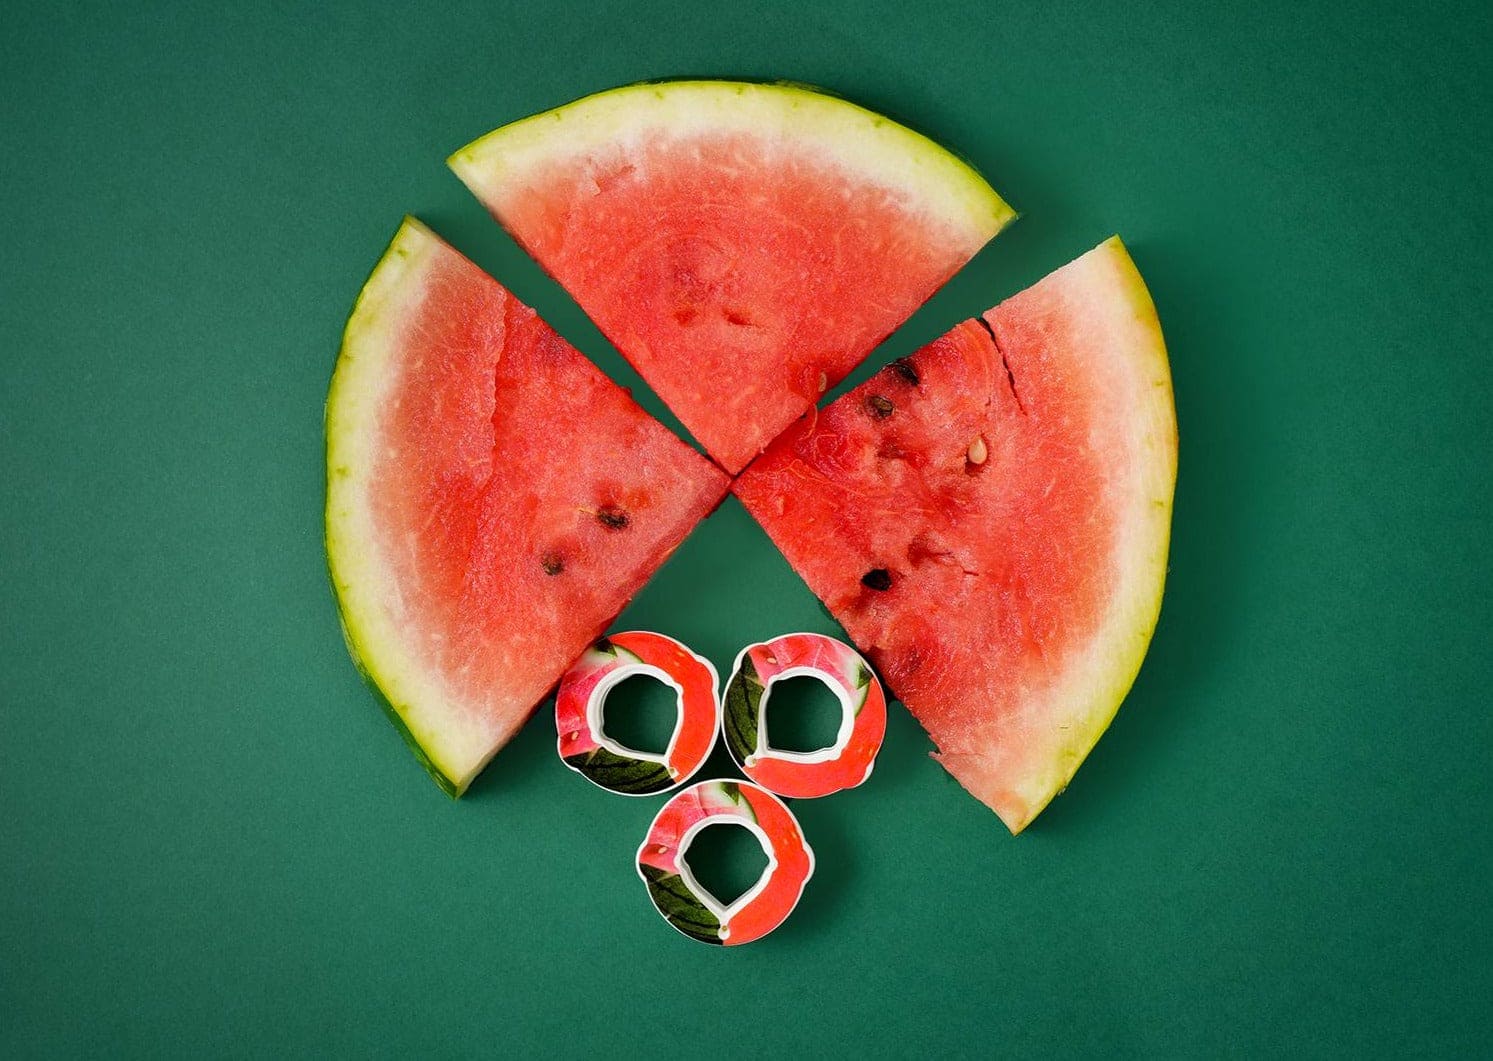 Watermelon pods